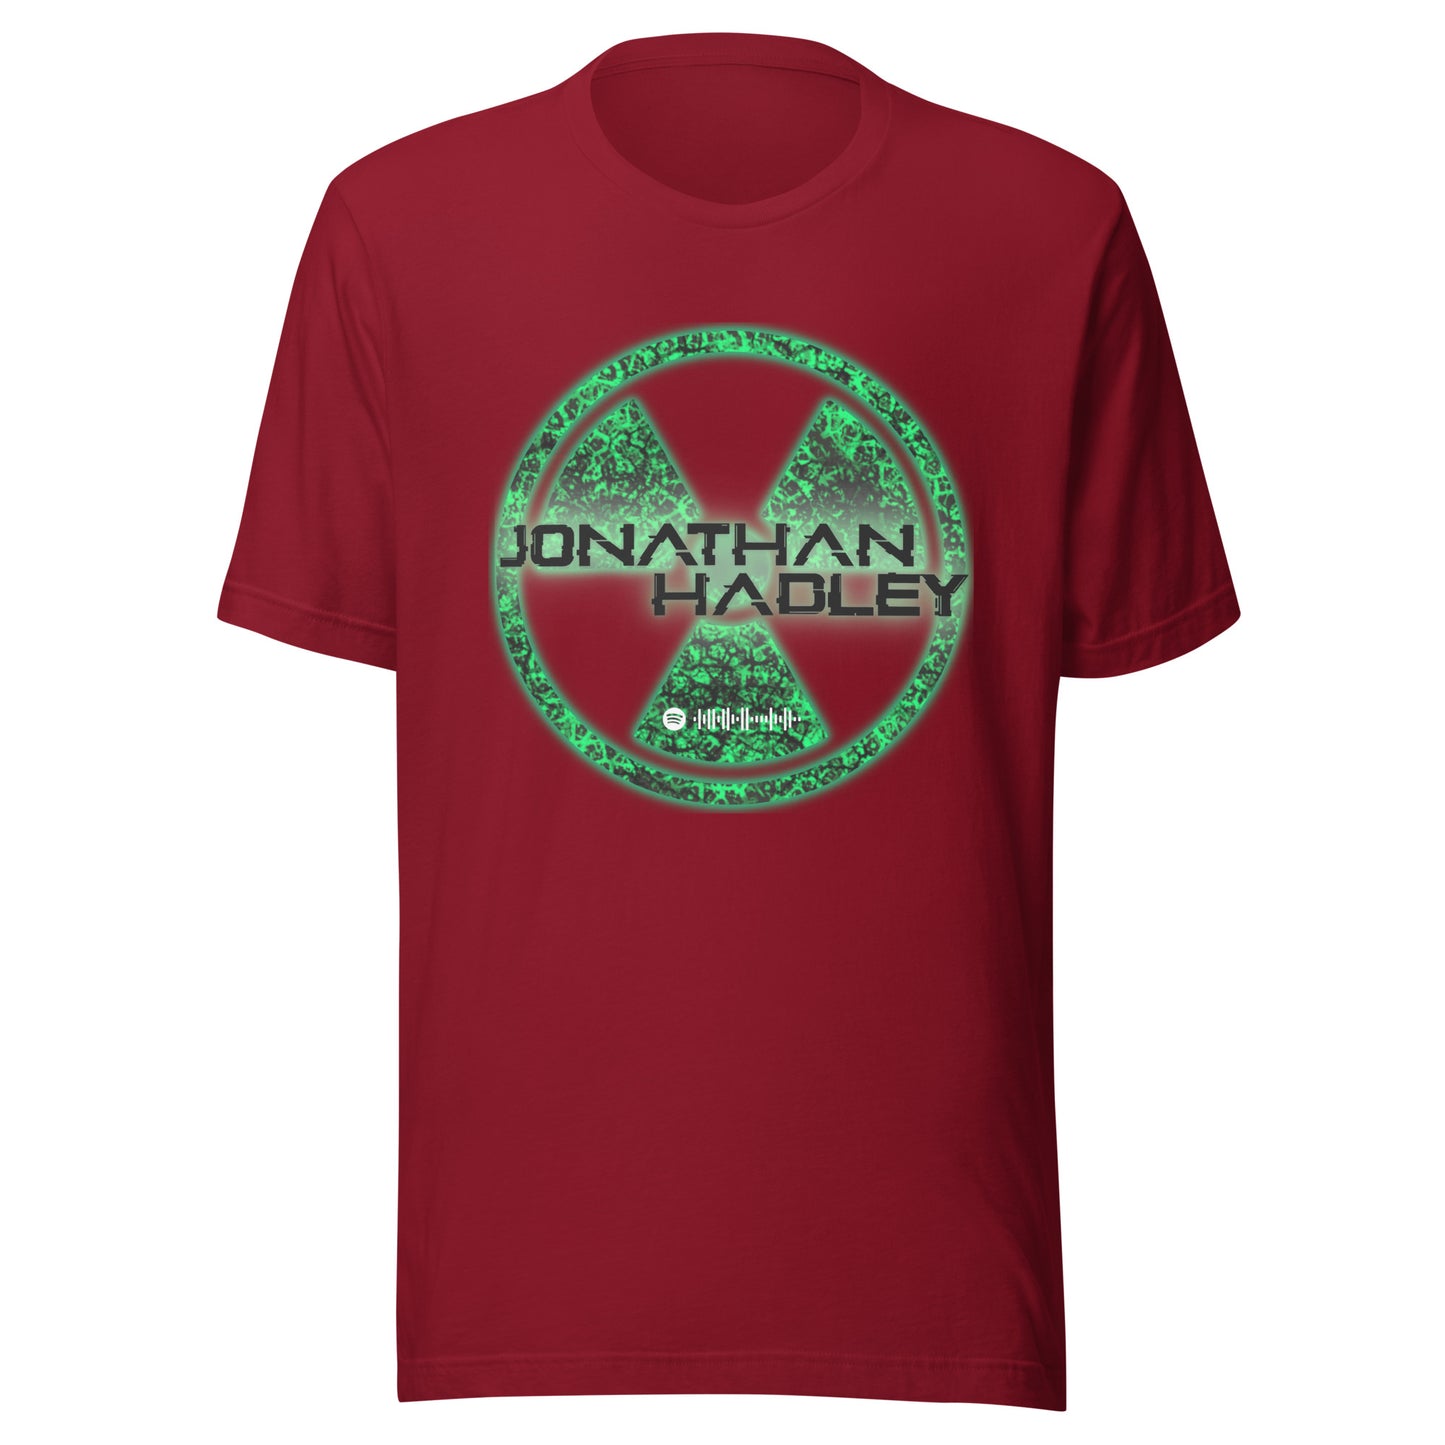 Jonathan Hadley Green Radiation T-Shirt